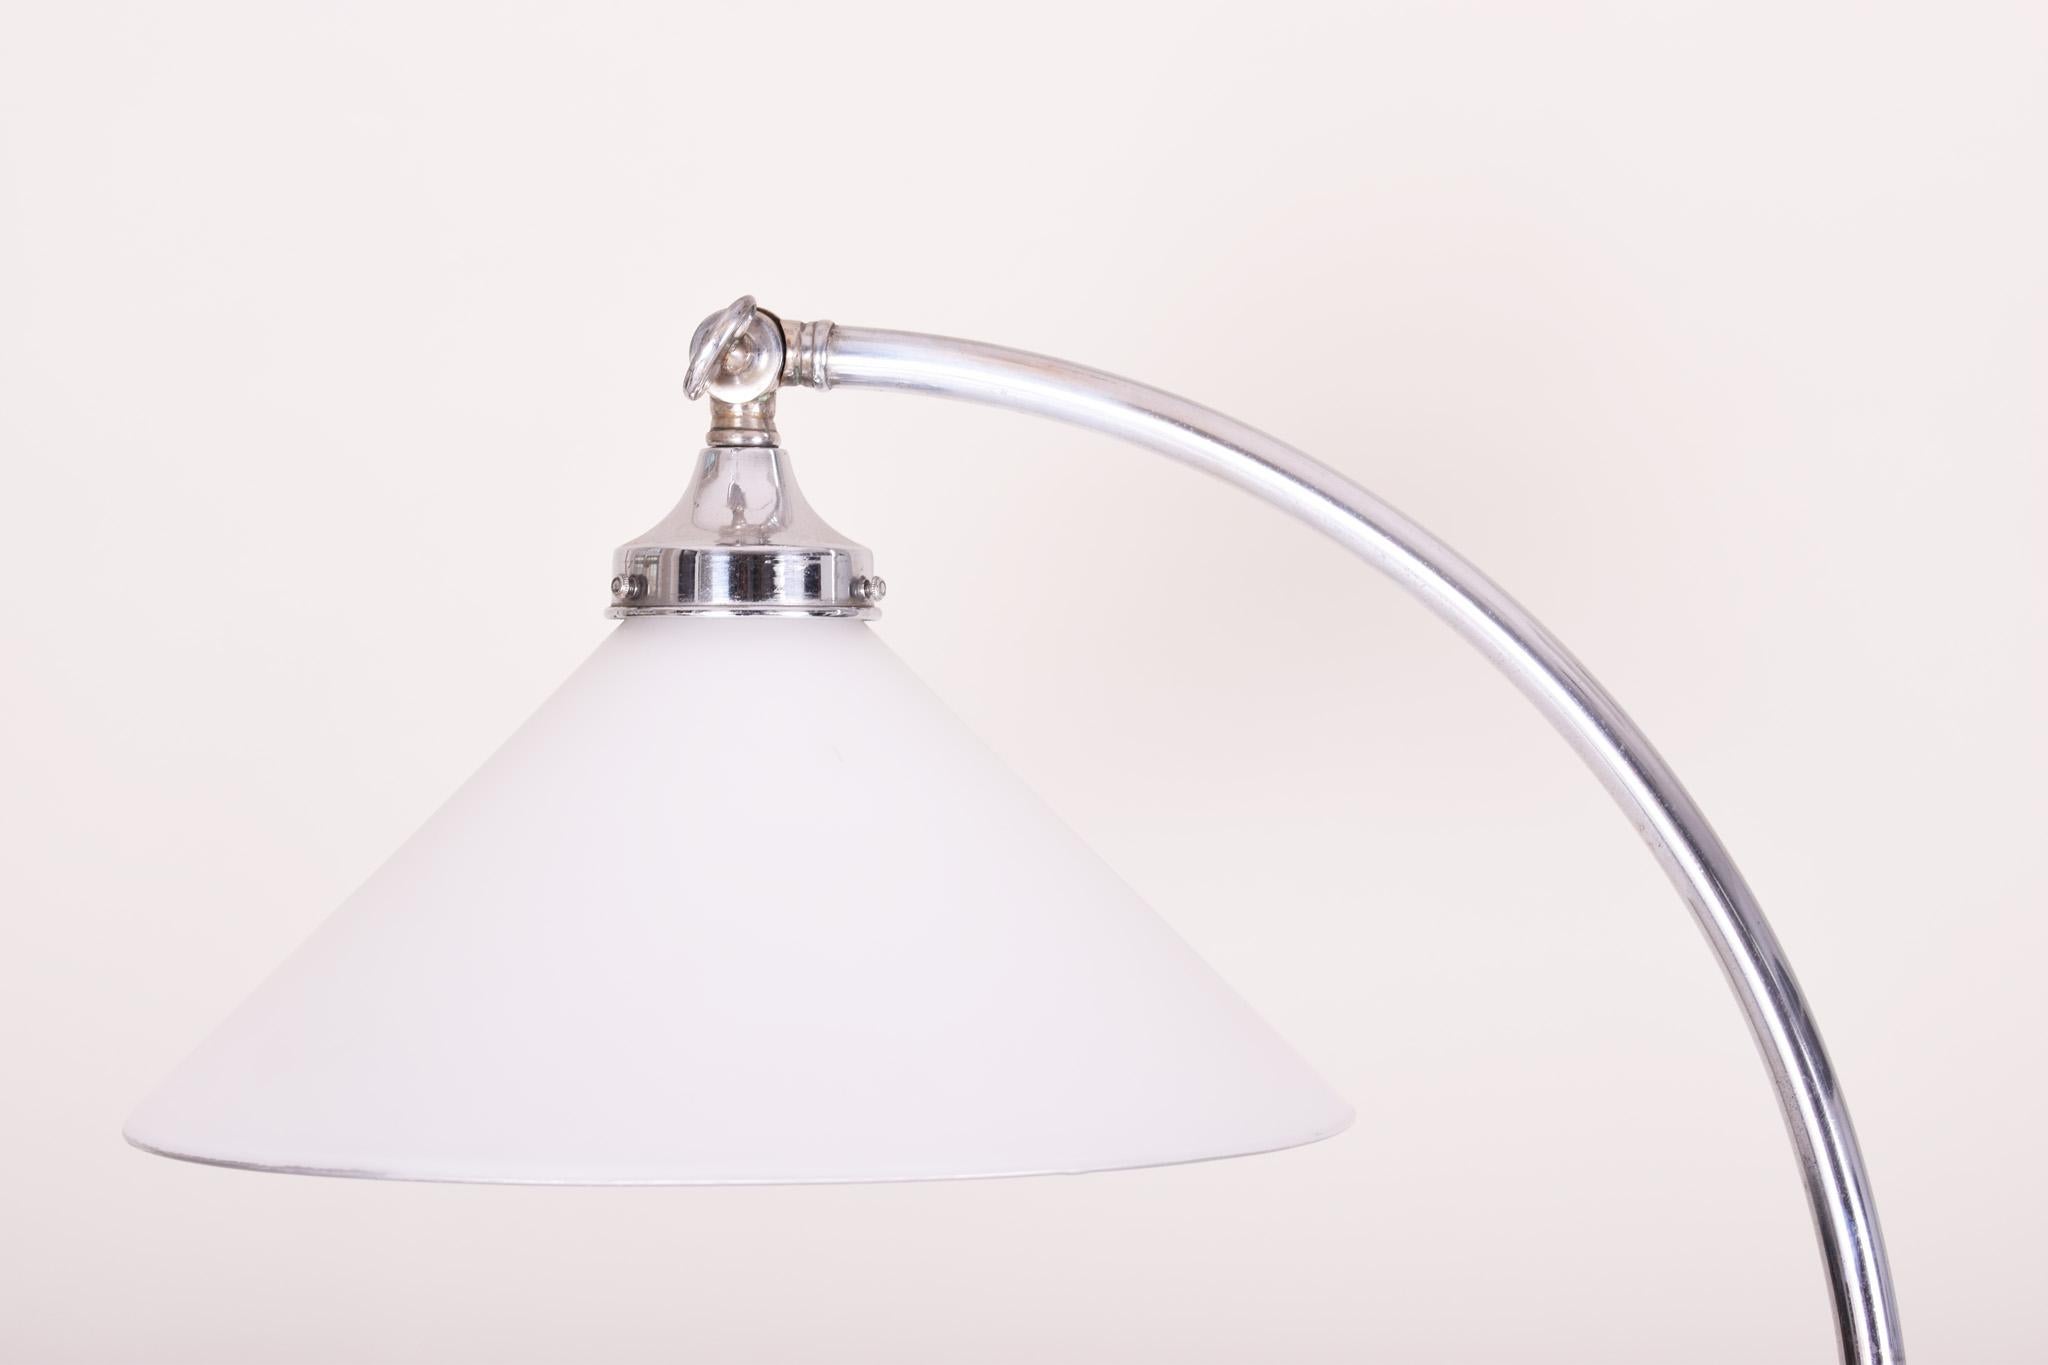 Art Deco Floor Lamp, Made in 1930s Czechia, Original Chrome In Excellent Condition For Sale In Horomerice, CZ